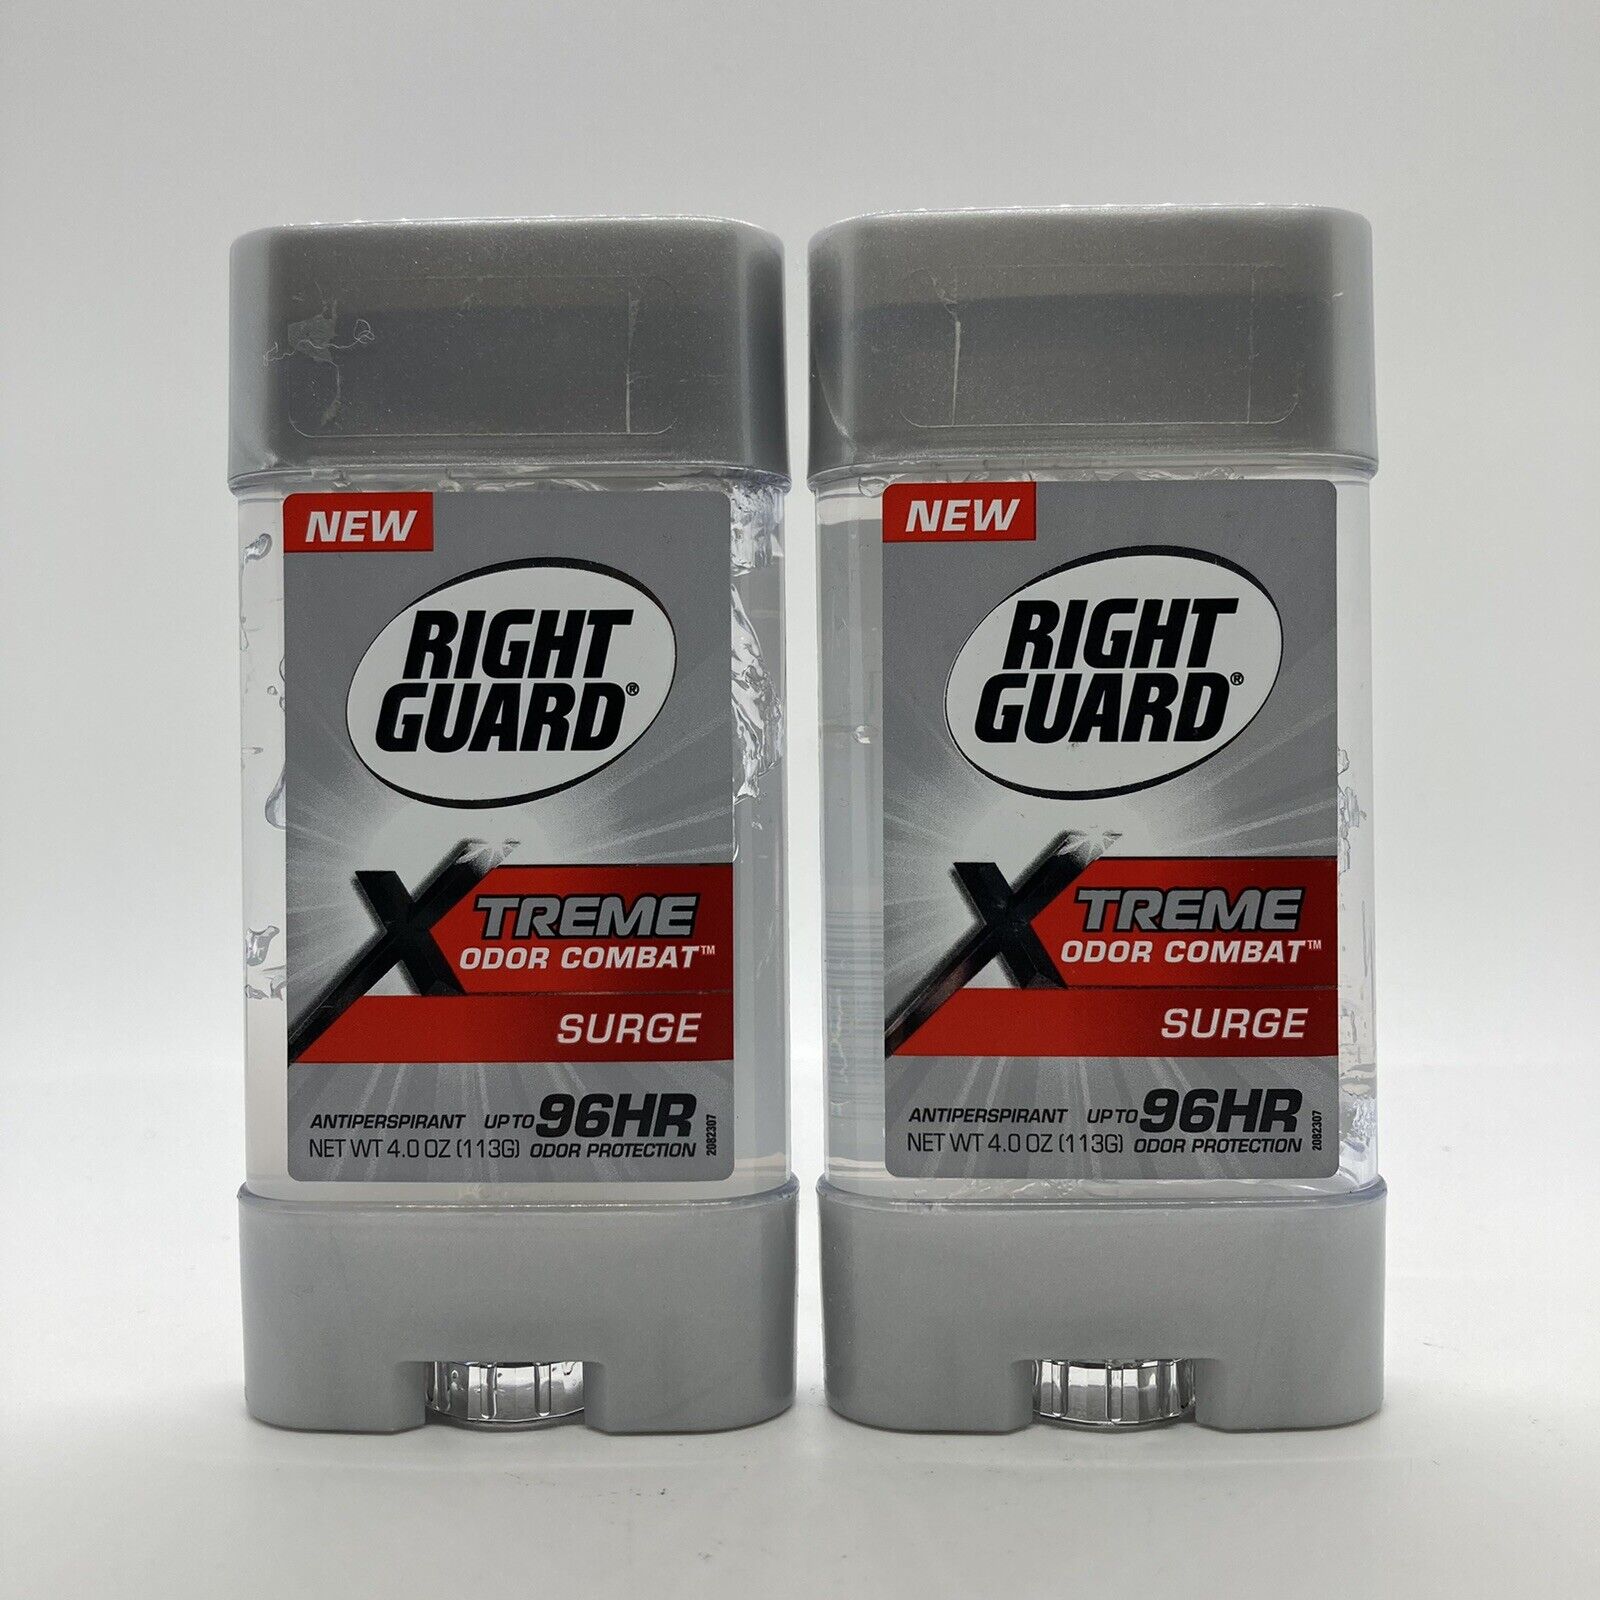 2x Right Guard XTreme Odor Combat Surge Antiperspirant Deodorant Gel, 4.0 oz ea